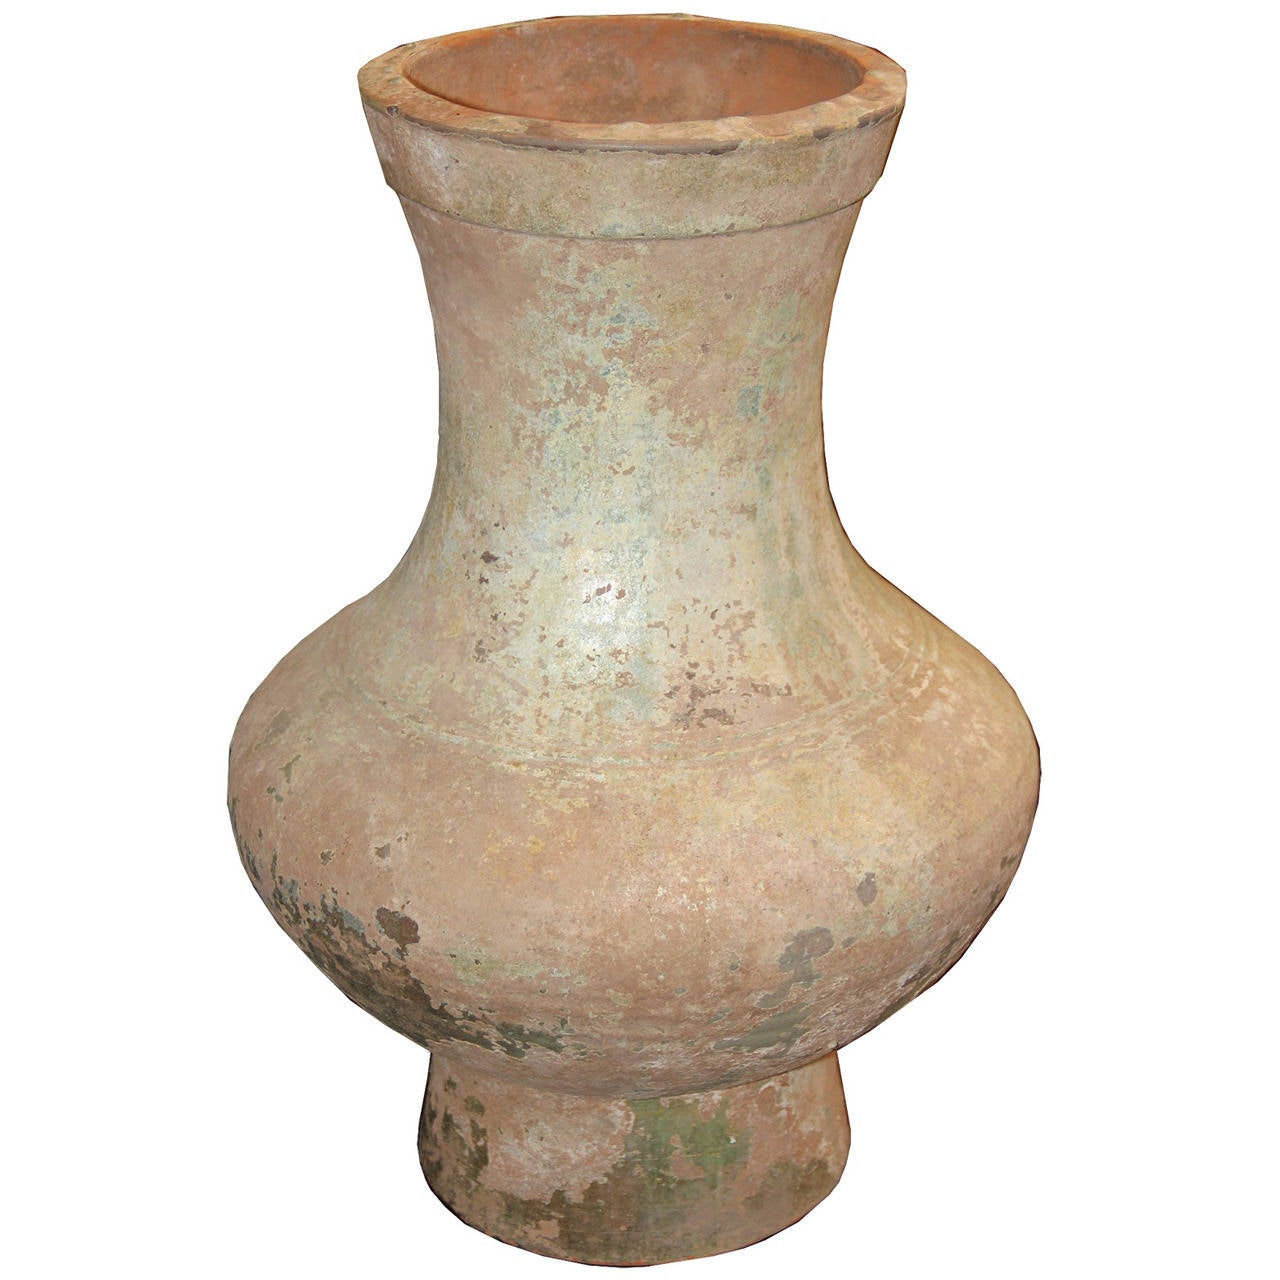 Chinese Han Dynasty Terra Cotta Jar